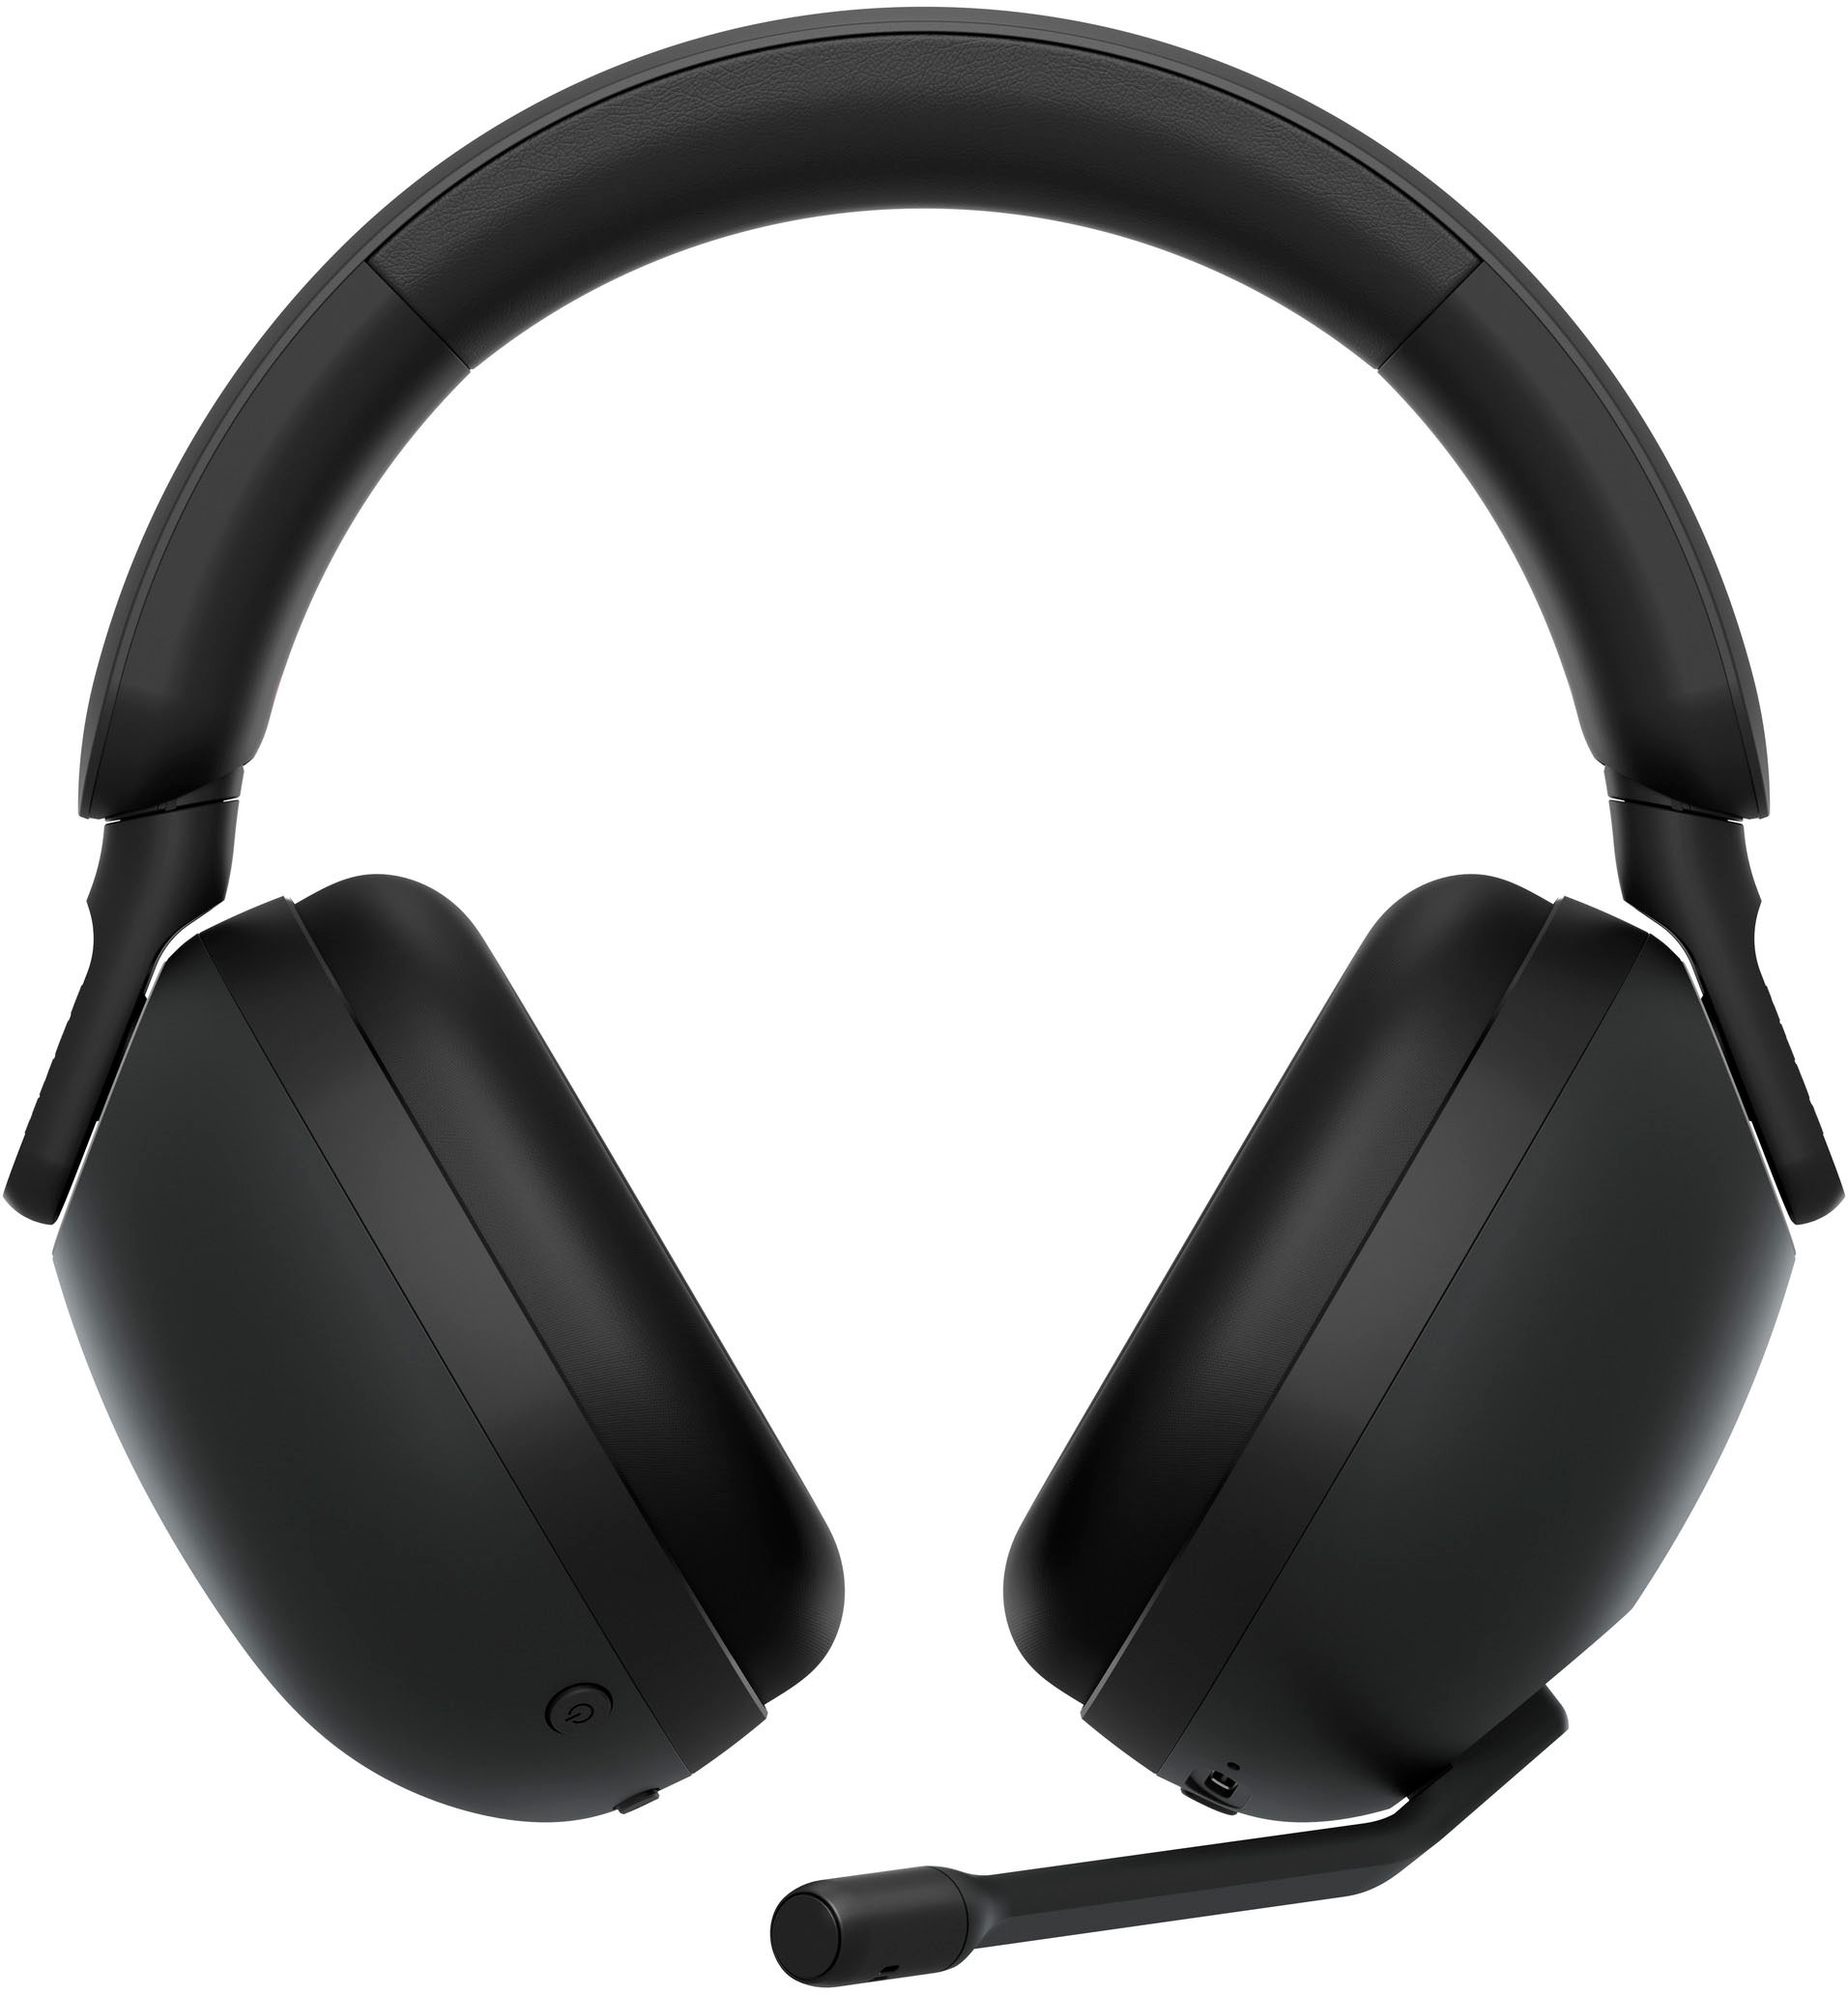 Sony INZONE H9 Wireless Noise Canceling Gaming Headset Black WHG900N/B -  Best Buy